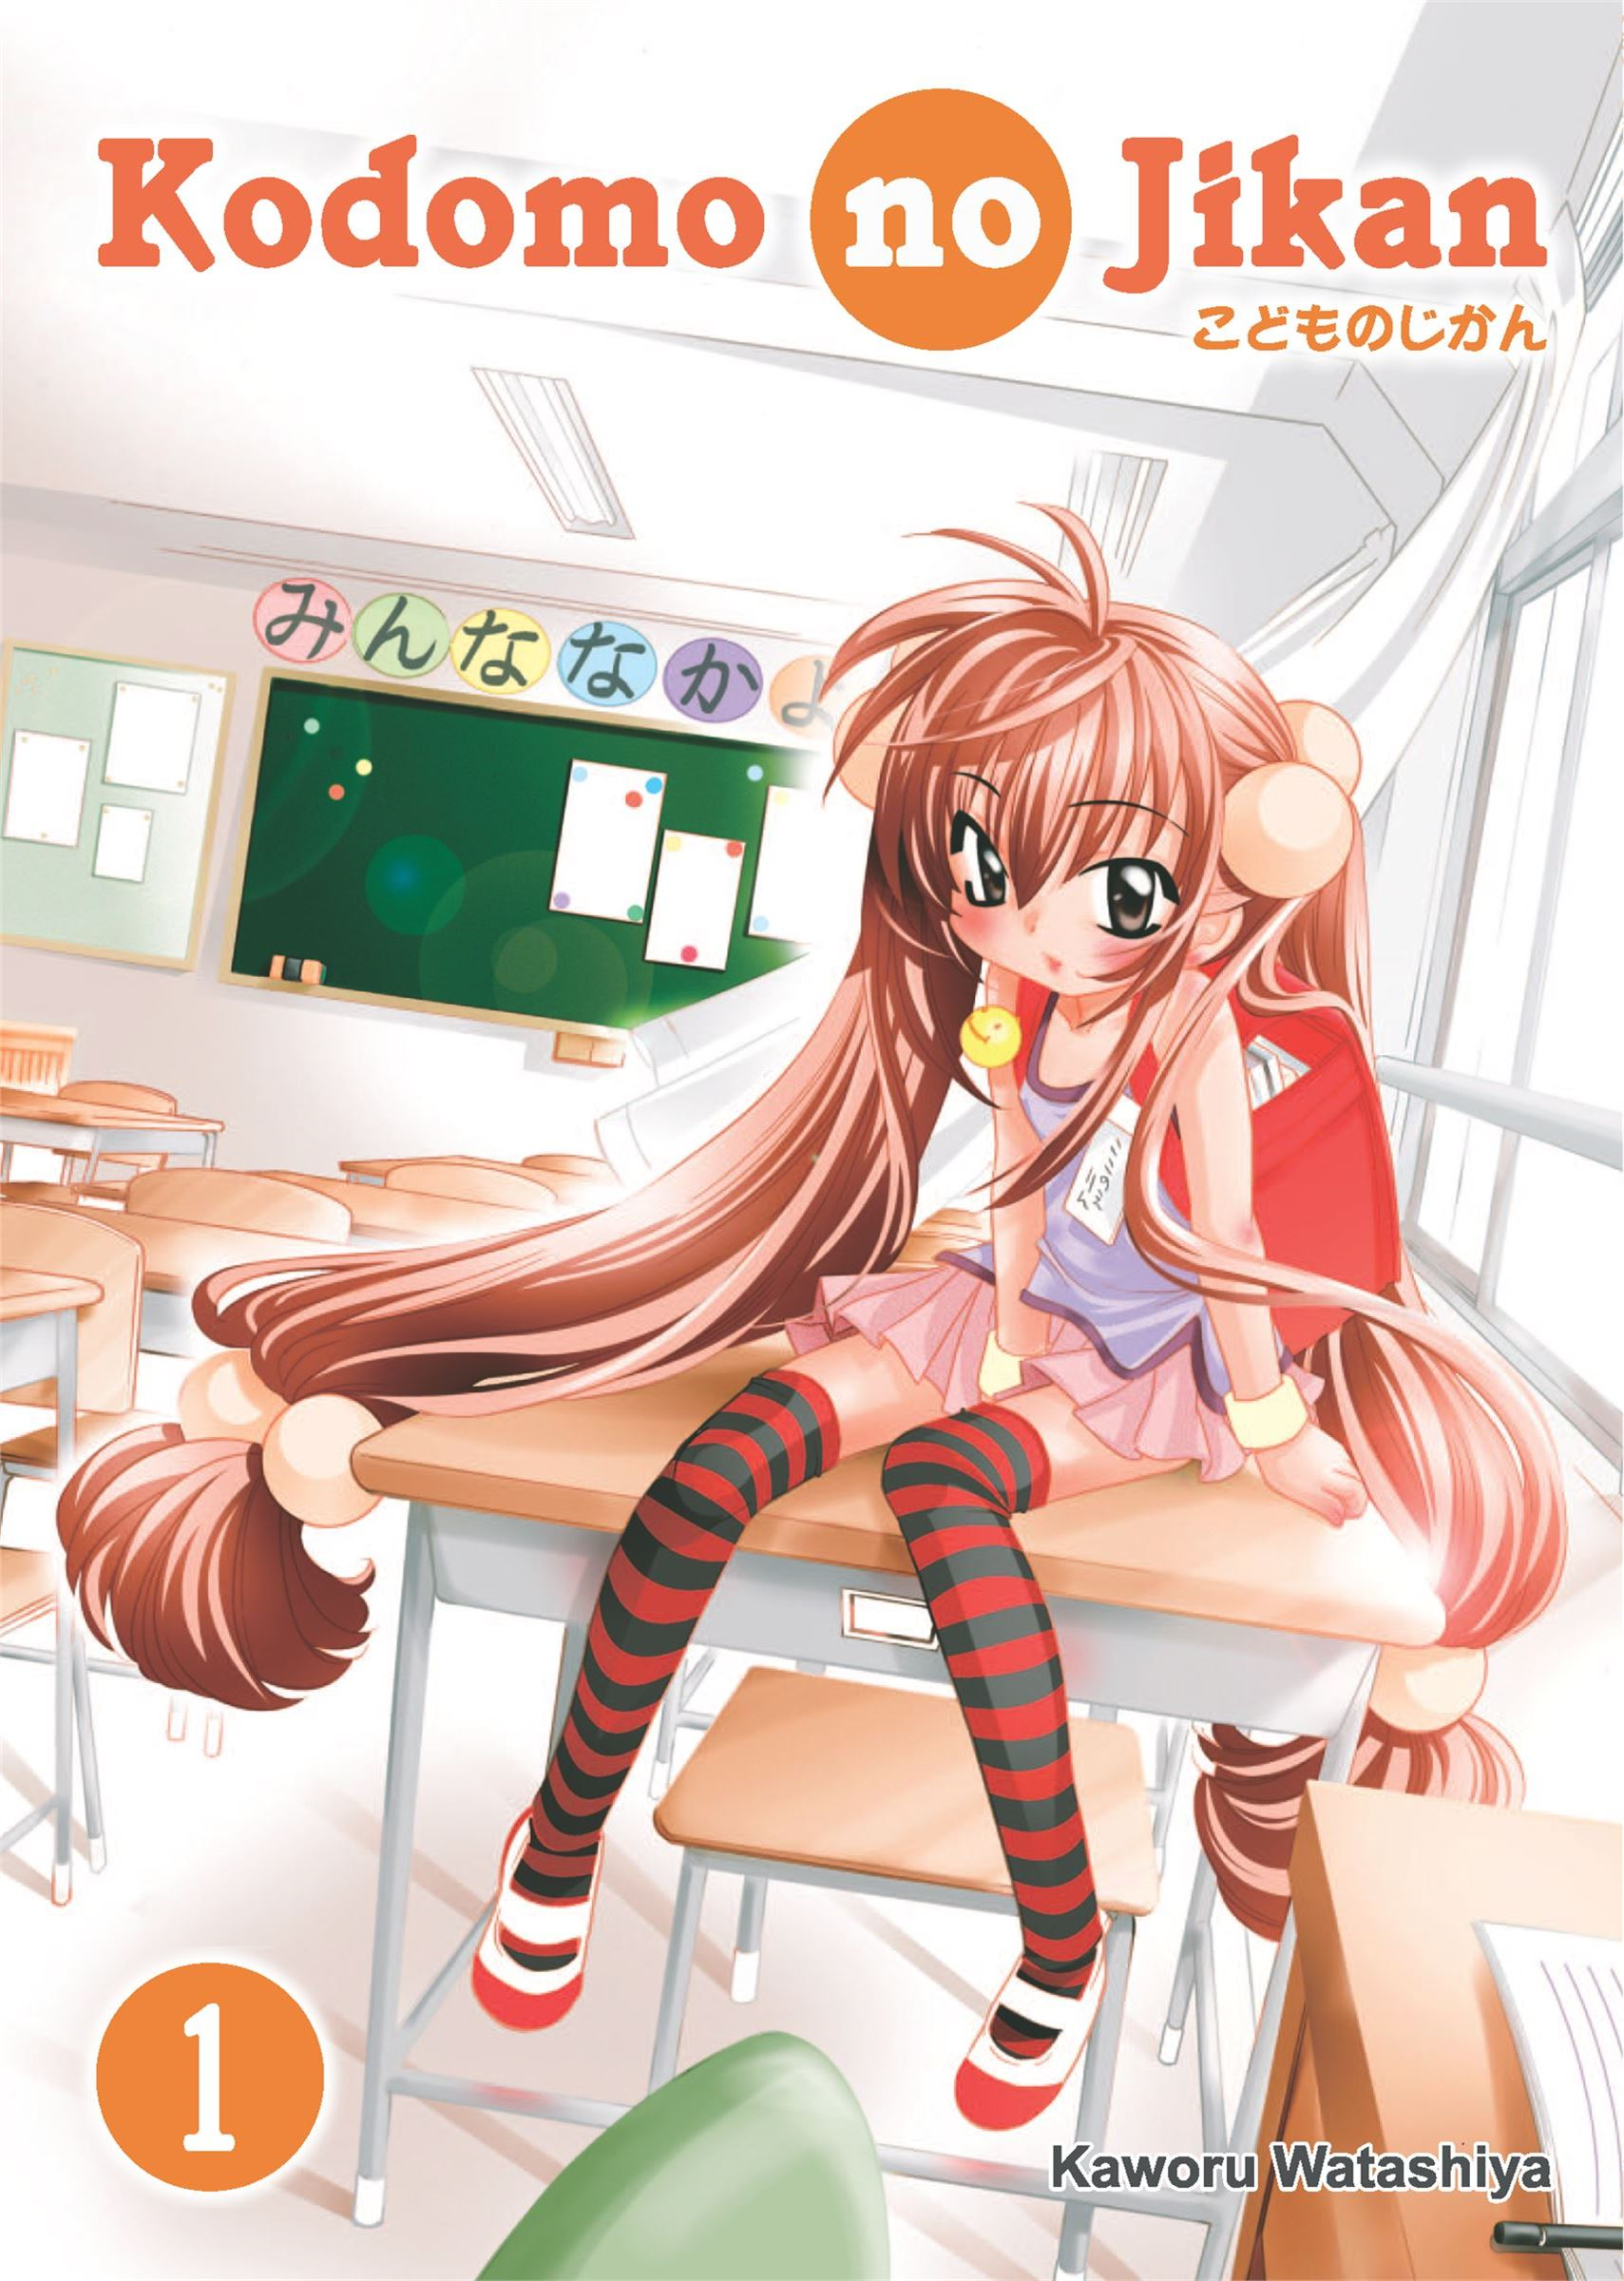 JAPAN Kaworu Watashiya manga Kodomo no Jikan vol.3 Special Limited Edition 